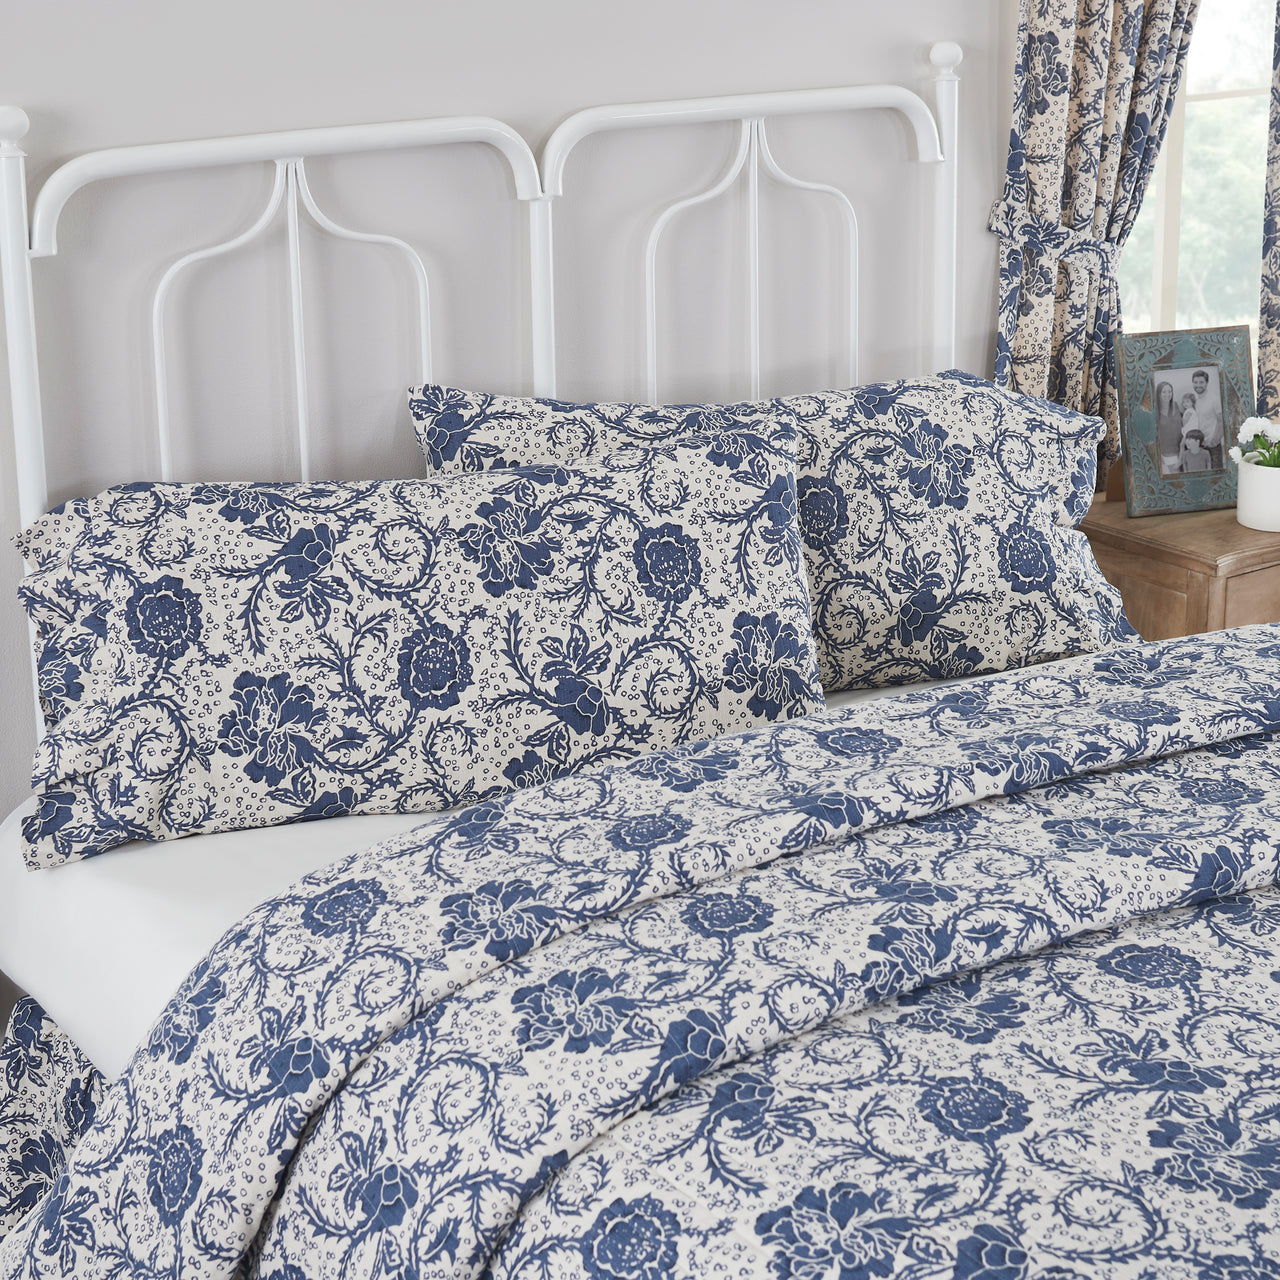 Dorset Navy Floral Ruffled King Pillow Case Set of 2 21x36+4 VHC Brands